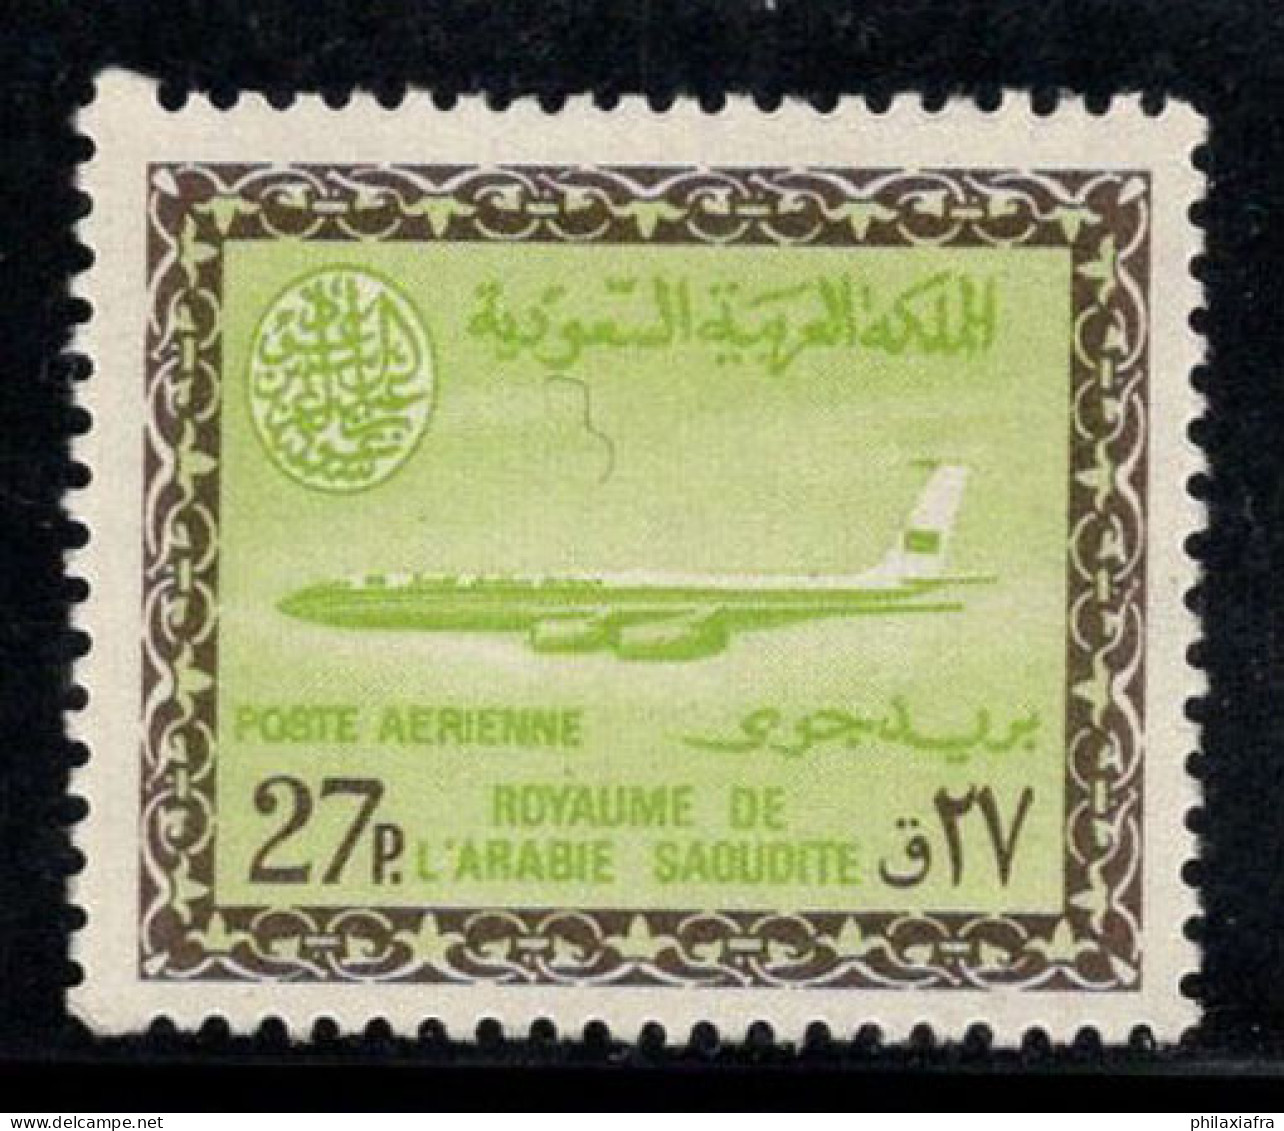 Arabie Saoudite 1965-72 Mi. 264 Neuf ** 100% Poste Aérienne 27 Pia, Boeing 720 B - Saudi-Arabien